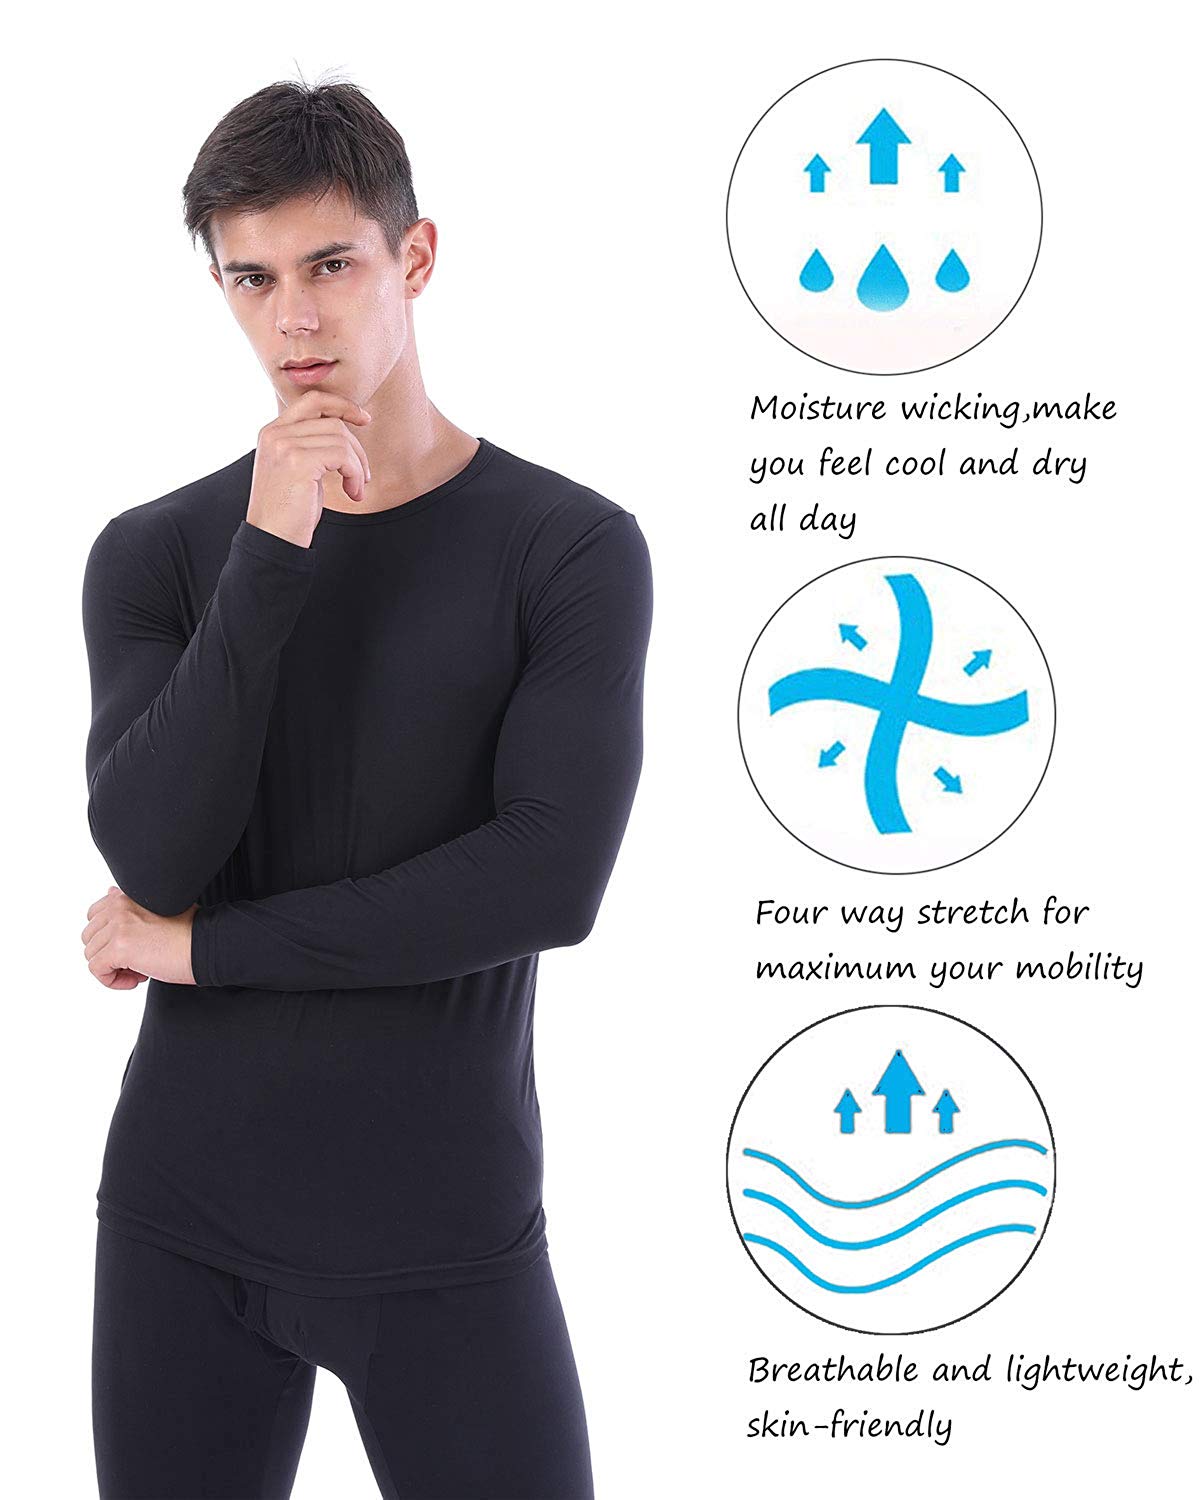 Men's Fleece Lined Compression Baselayer Thermal Long Sleeve Shirt LANBAOSI